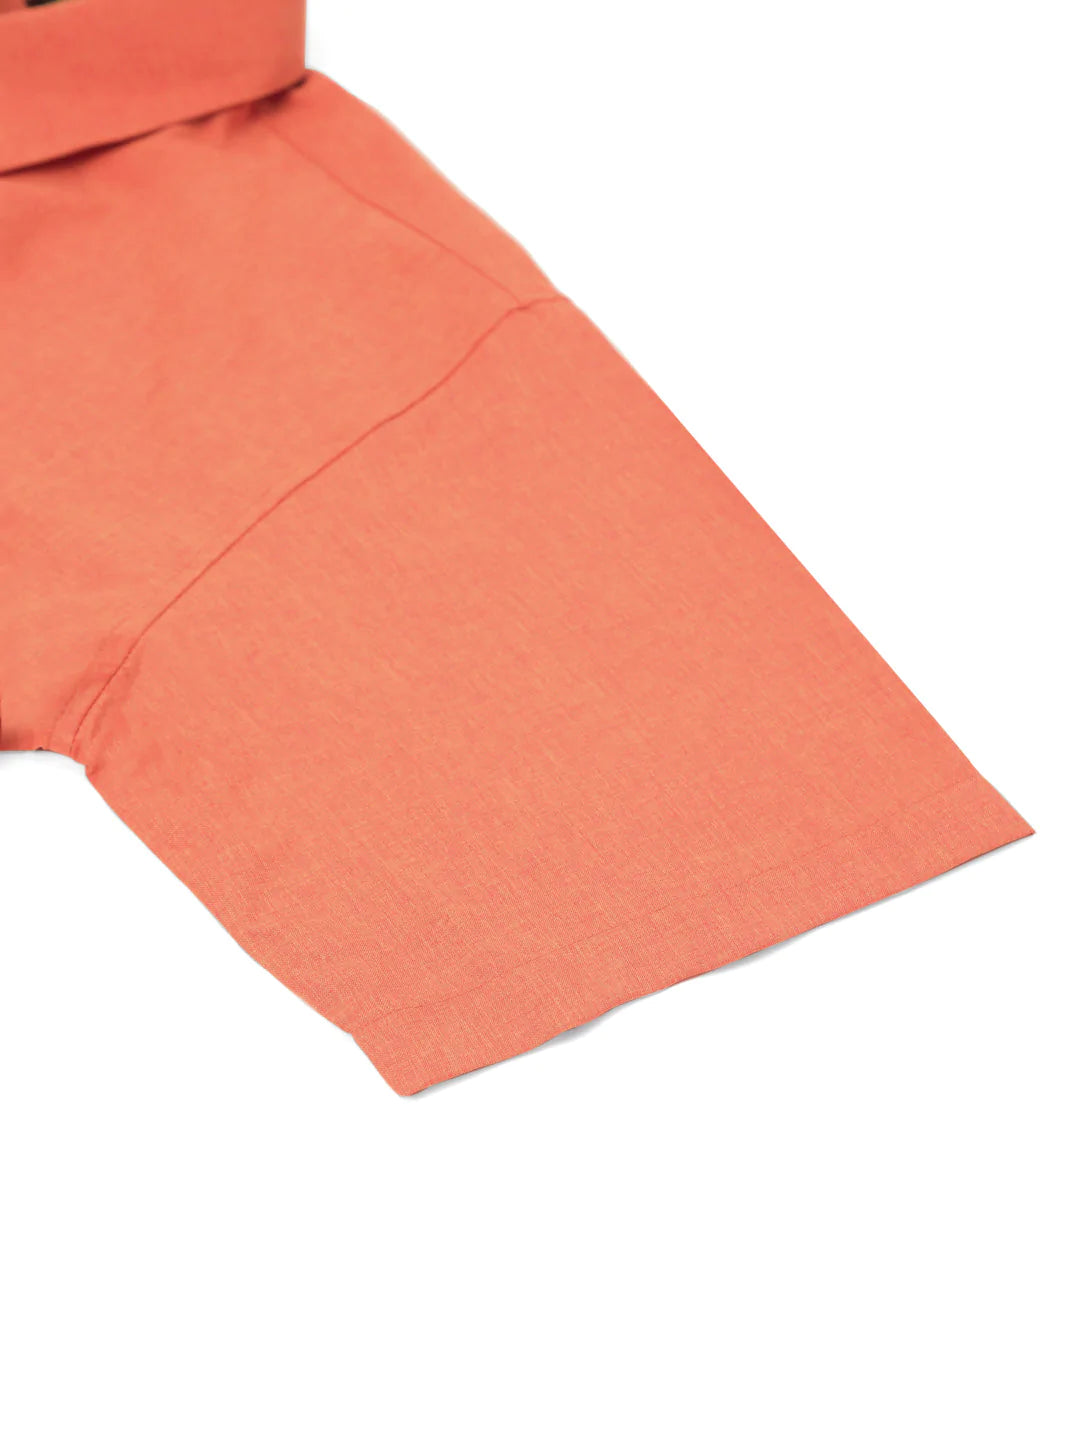 Jainish Men's Cotton Solid Half Sleeve Formal Shirts ( SF 811Peach )